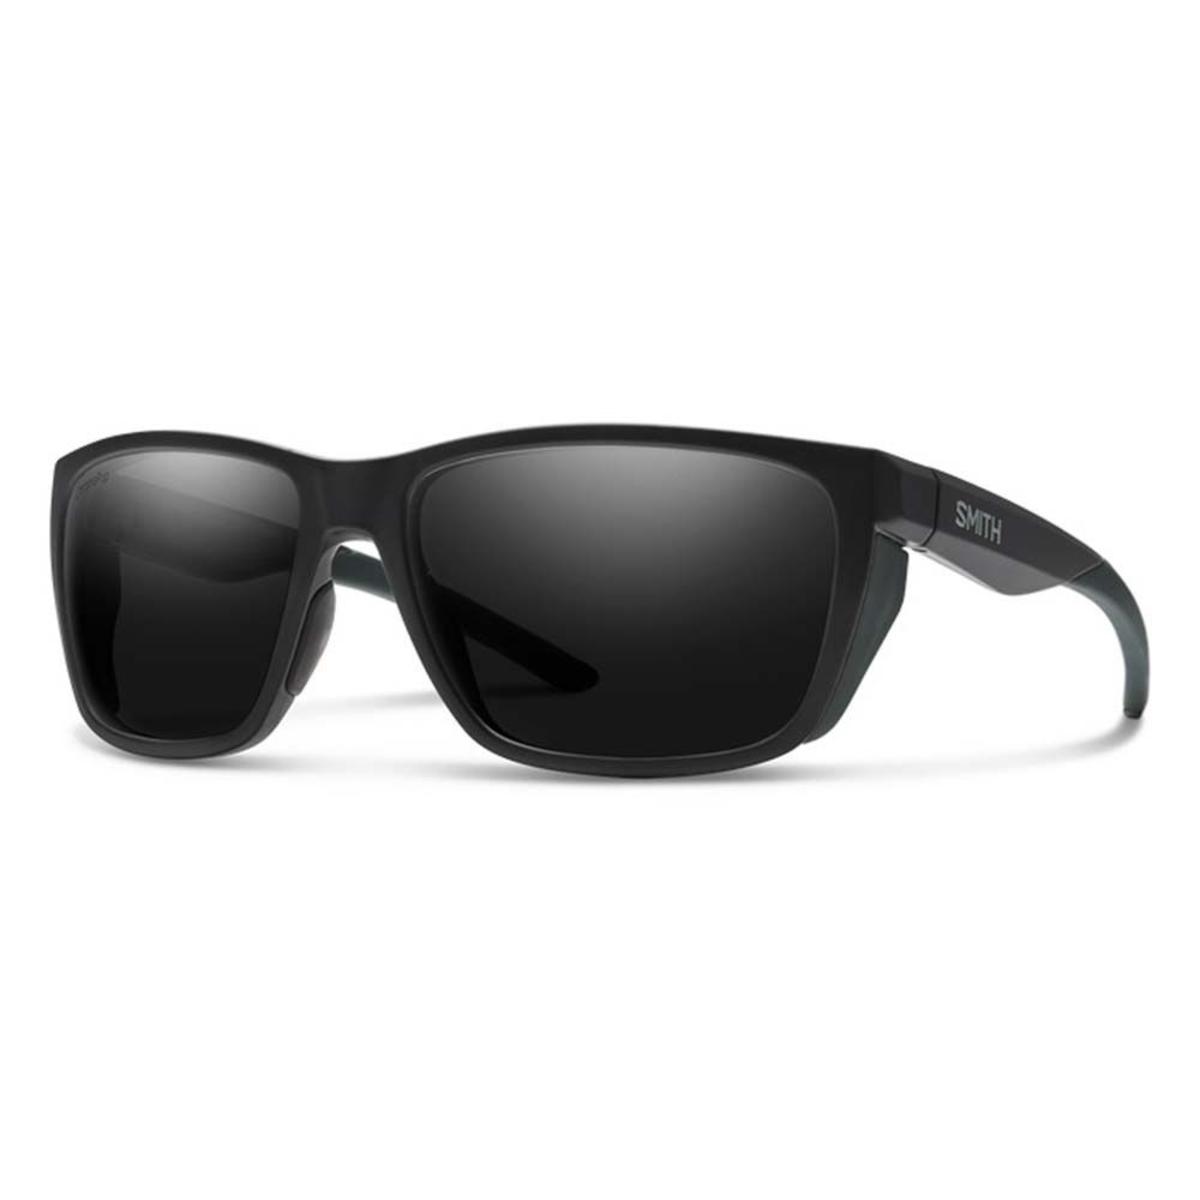 Smith Optics Longfin Sunglasses ChromaPop Polarized Black - Matte Black Frame